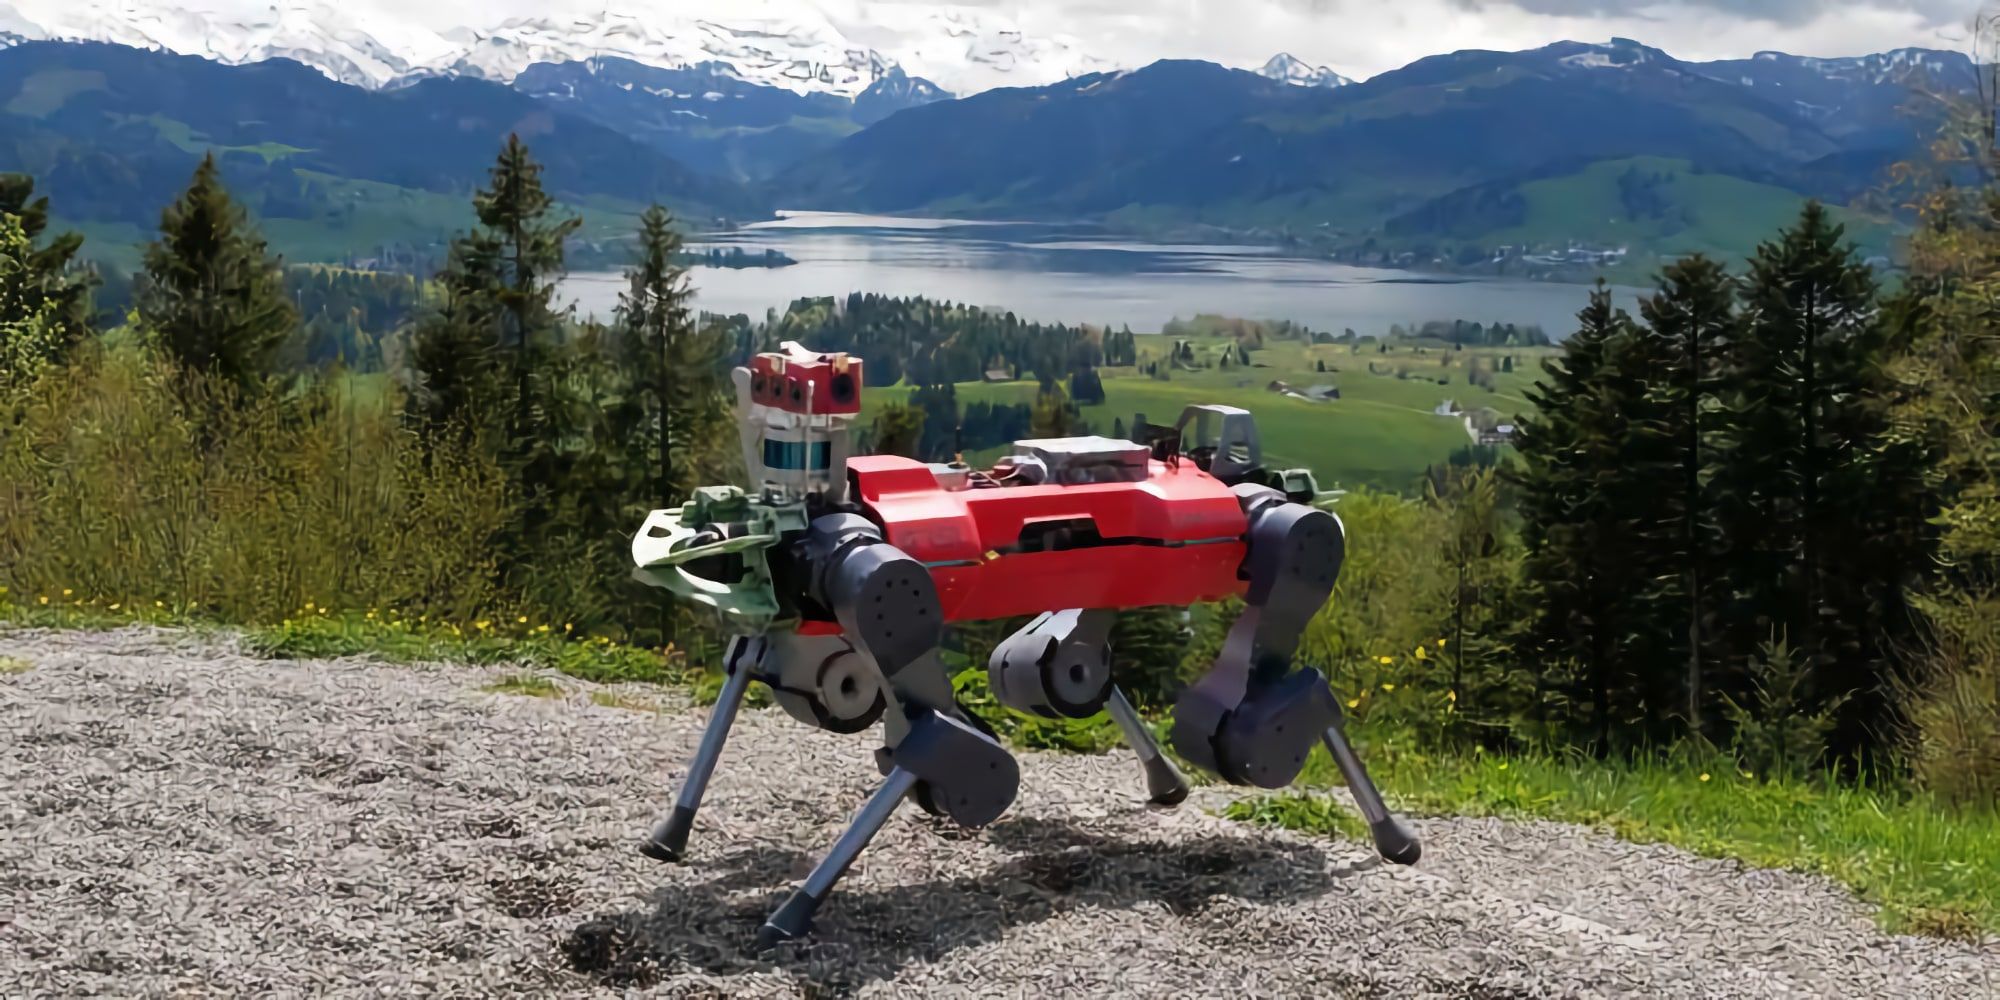 ETH Zurich ANYmal Mountain Landscape Quadruped Robot Four-Legged